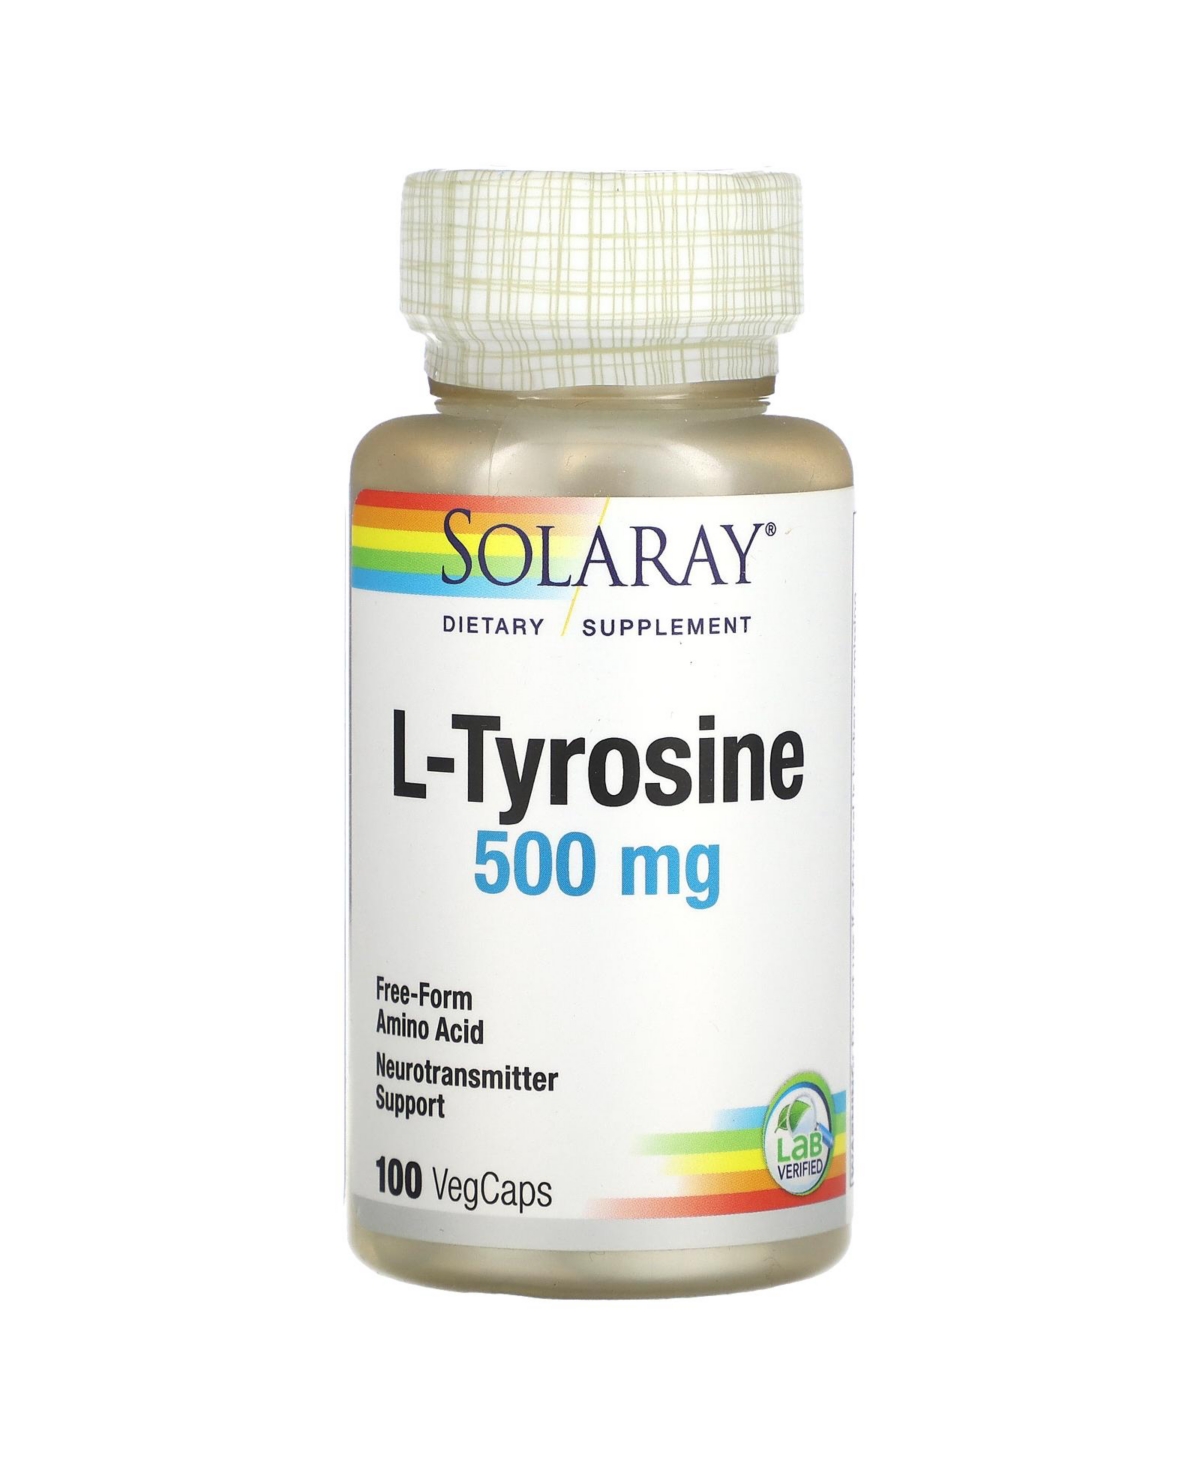 L-Tyrosine 500 mg - 100 VegCaps - Assorted Pre-pack (See Table